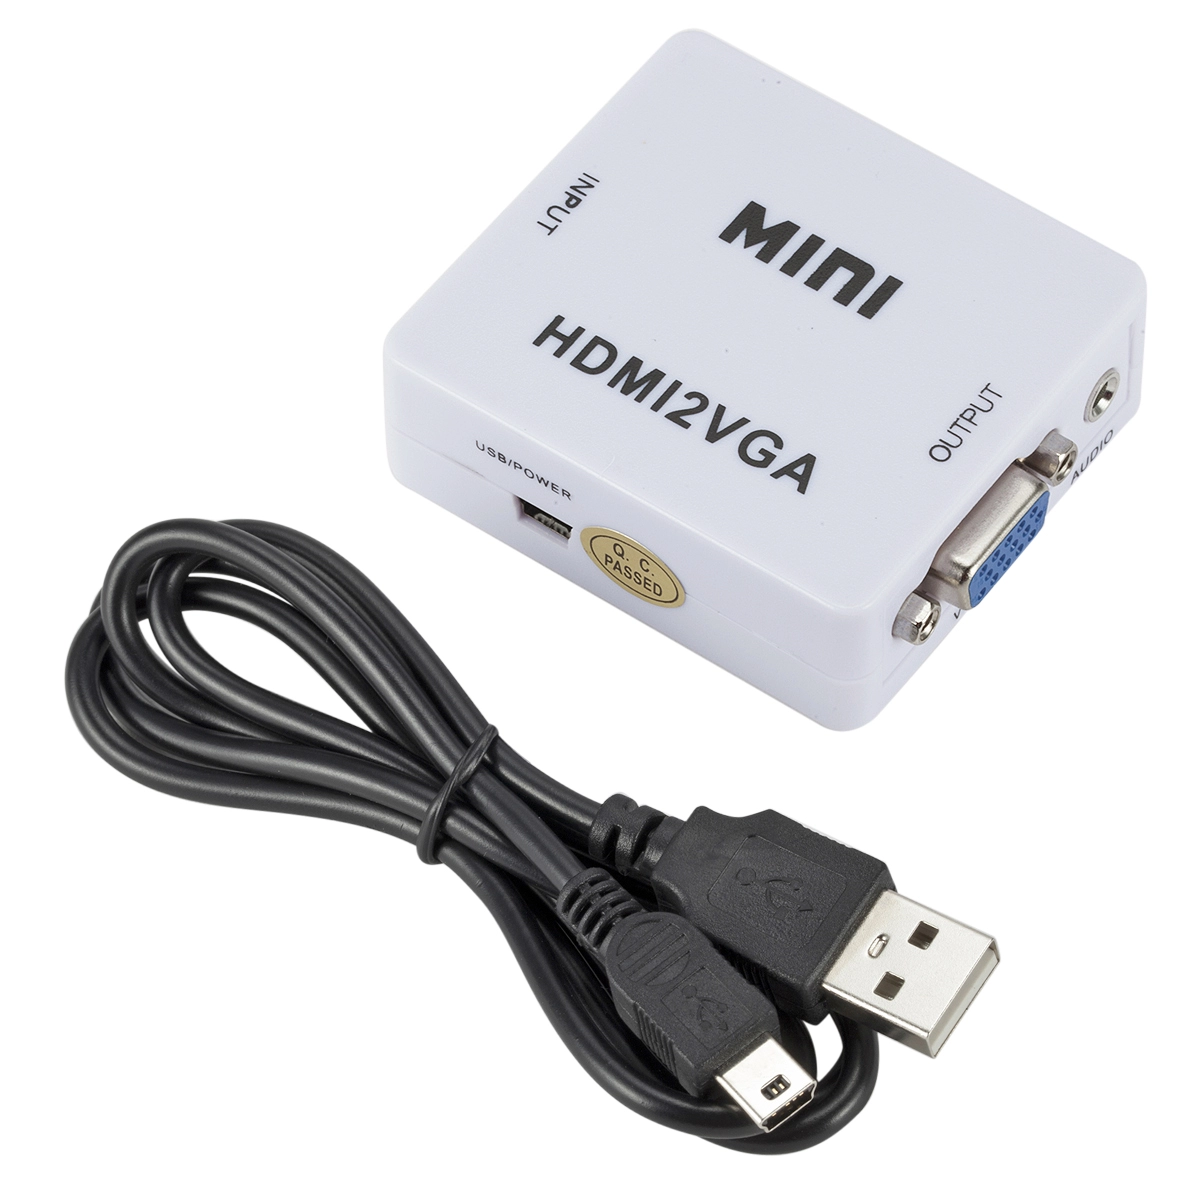 HDMI2VGA, Industry Standard